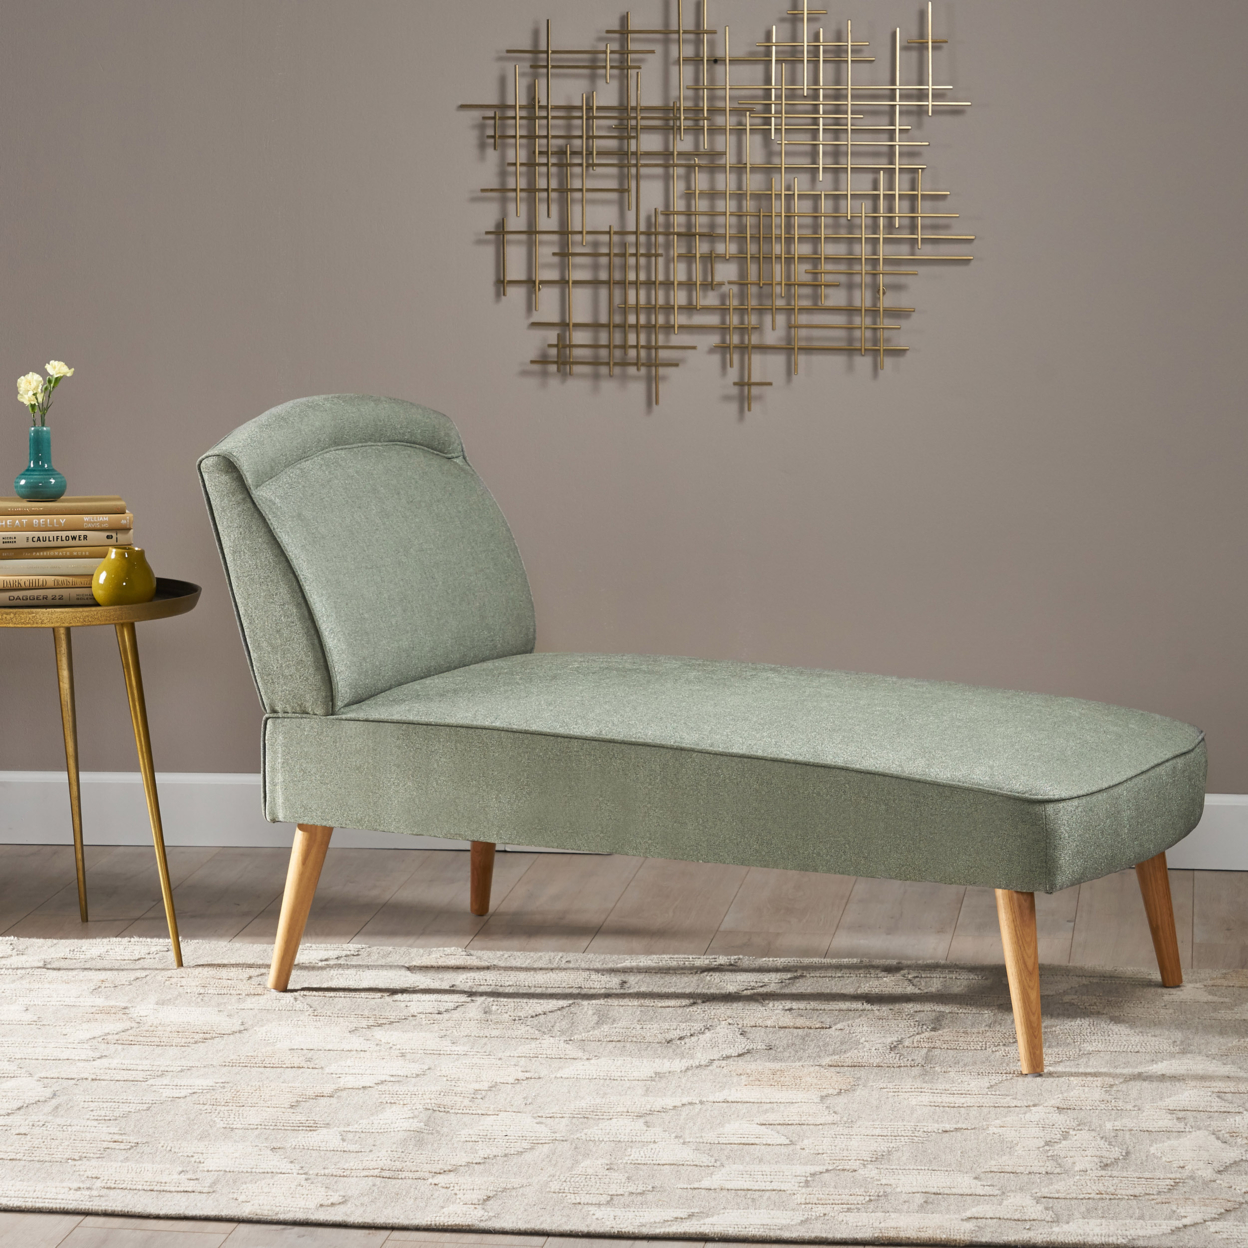 Jolie Mid Century Modern Fabric Chaise Lounge - Navy Blue